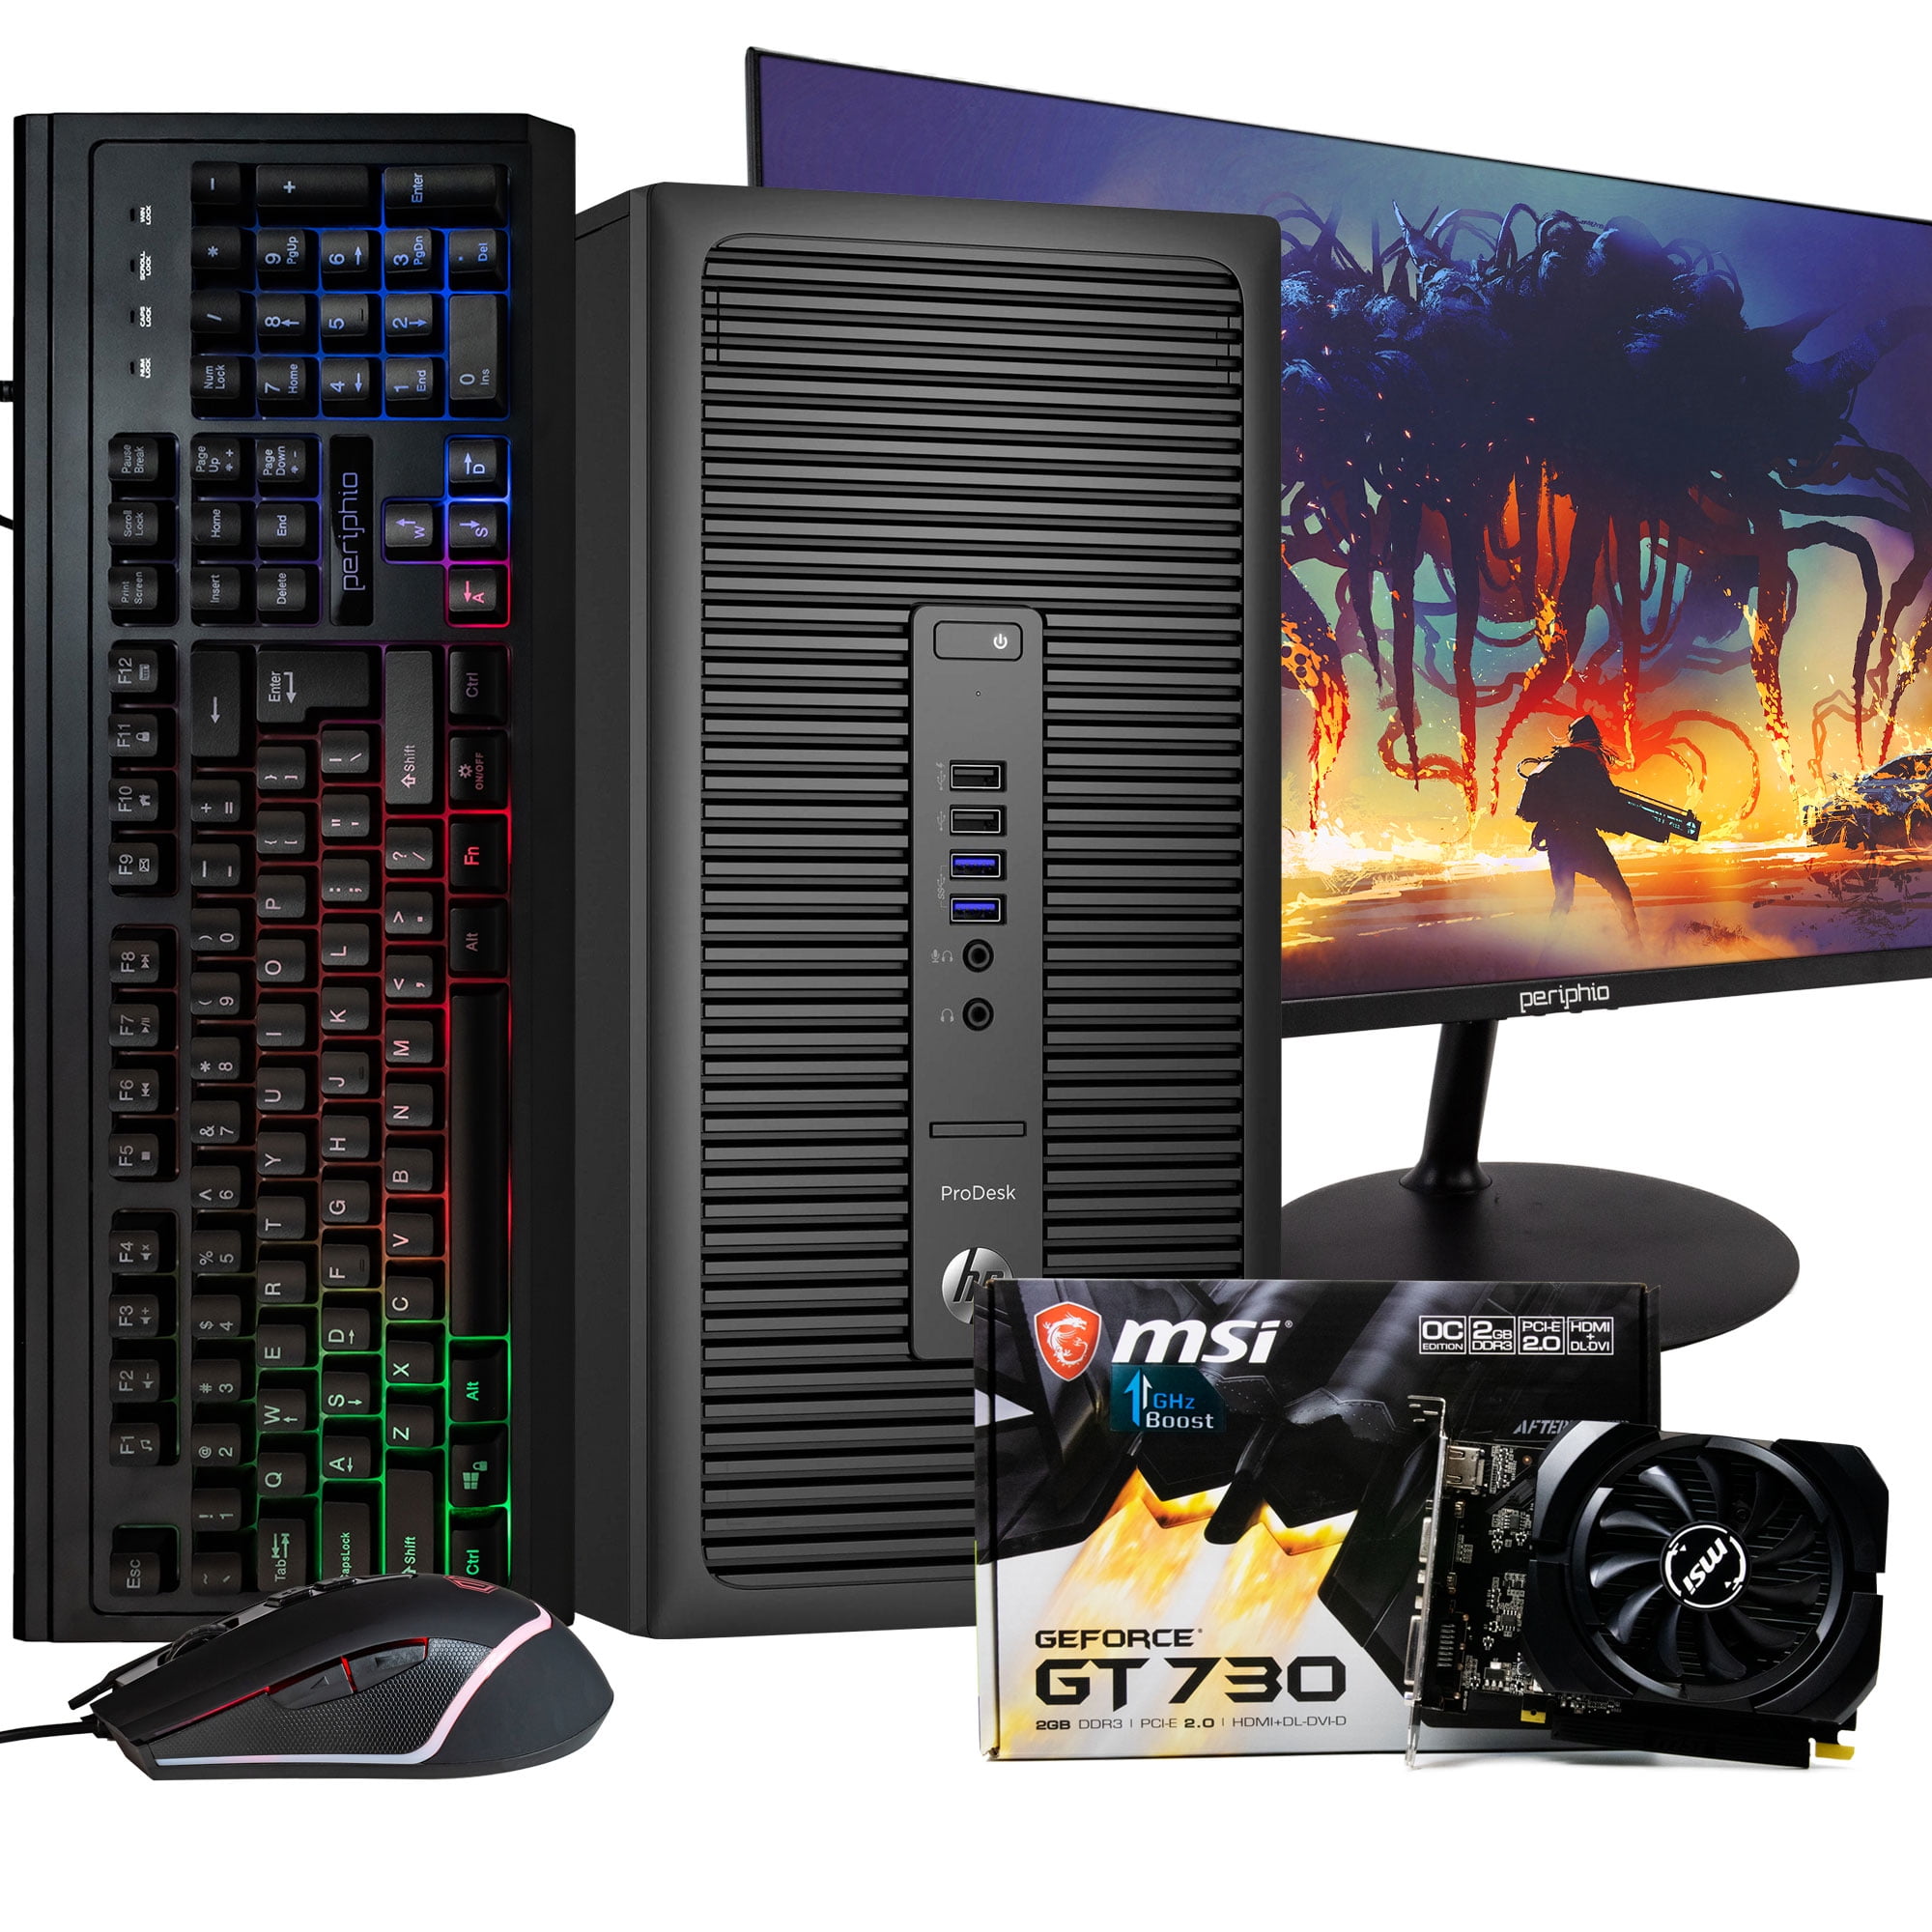 verlies Rentmeester Voorkeur HP Gaming Computer, Intel Quad-Core i5, GeForce GT 730 (2GB), 240GB SSD +  1TB HDD, 16GB DDR4 RAM, DVD, WIFI, Bluetooth, Windows 10 Home Gaming, NEW  24” LCD, RGB Gaming Bundle (Renewed) - Walmart.com